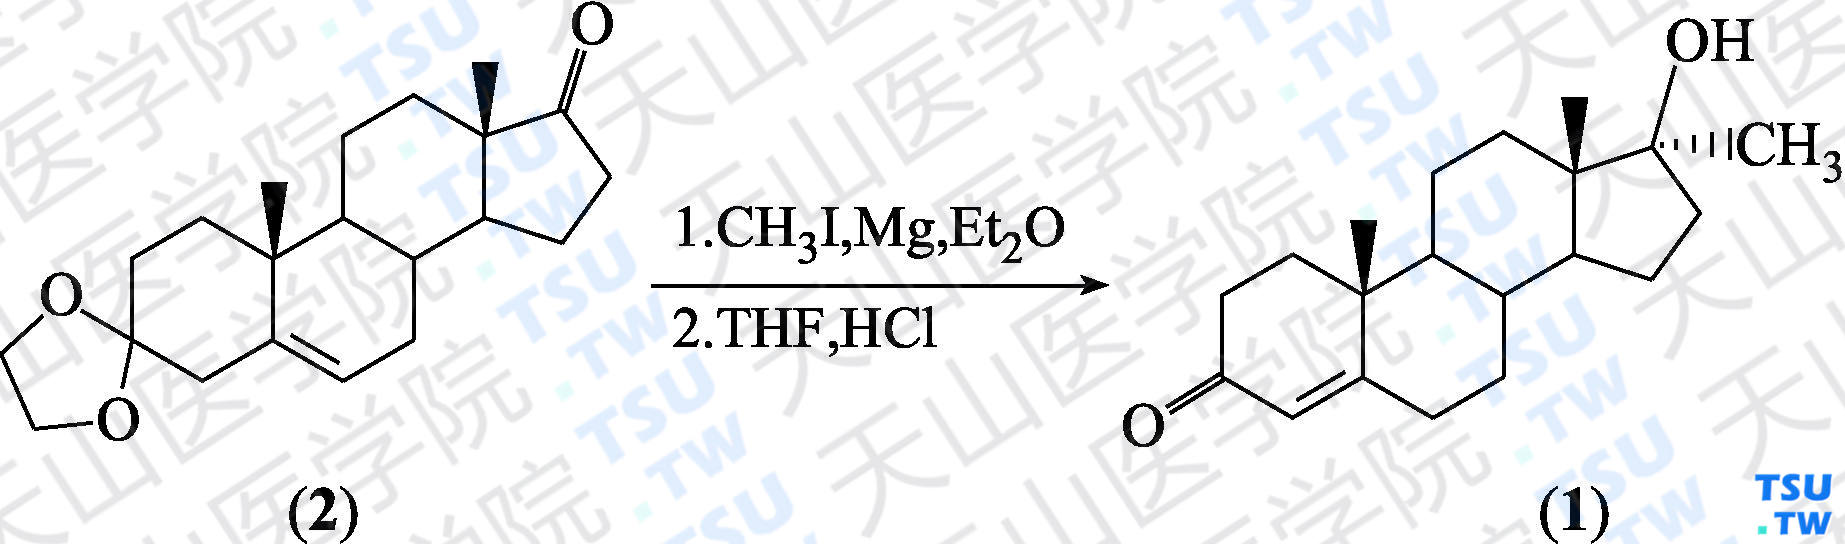 甲睾酮（分子式：C<sub>20</sub>H<sub>30</sub>O<sub>2</sub>）的合成方法路线及其结构式